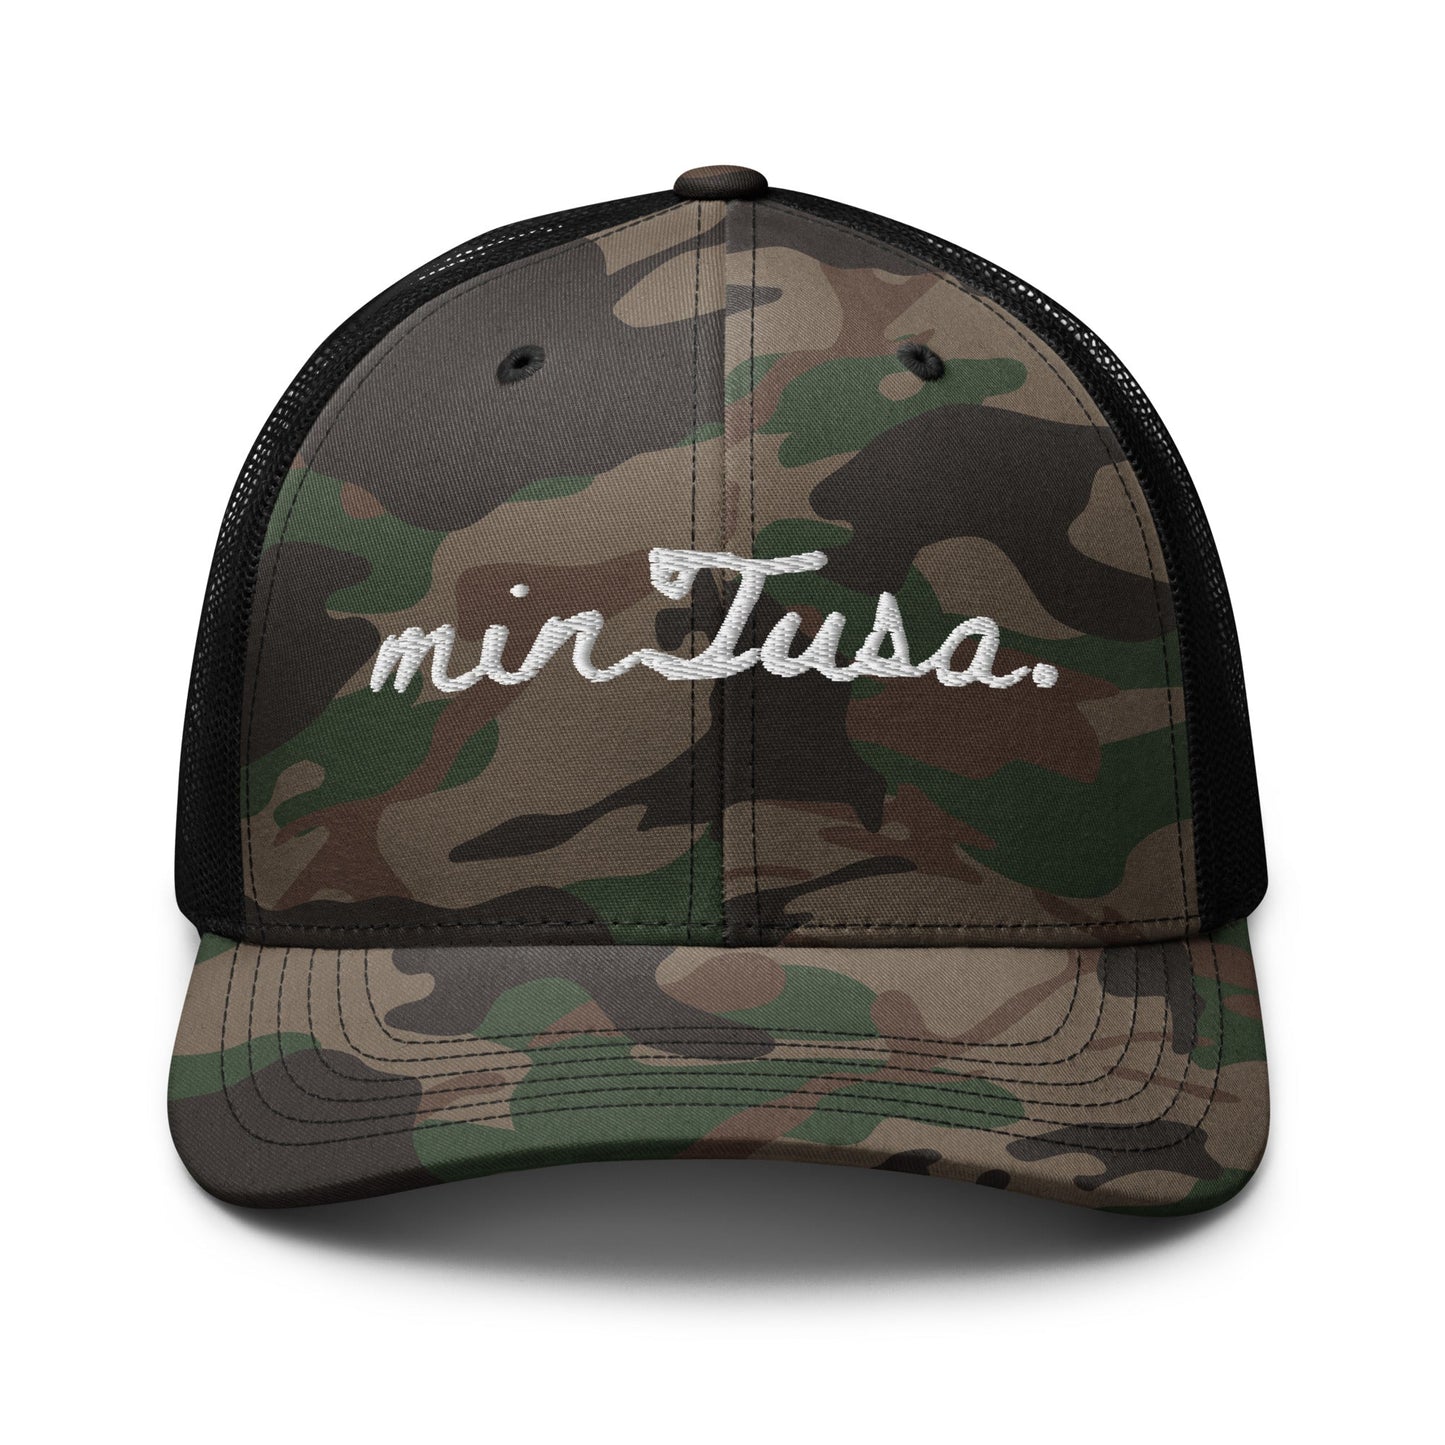 minTusa Original Brand Camouflage Trucker Hat myminTusa.com